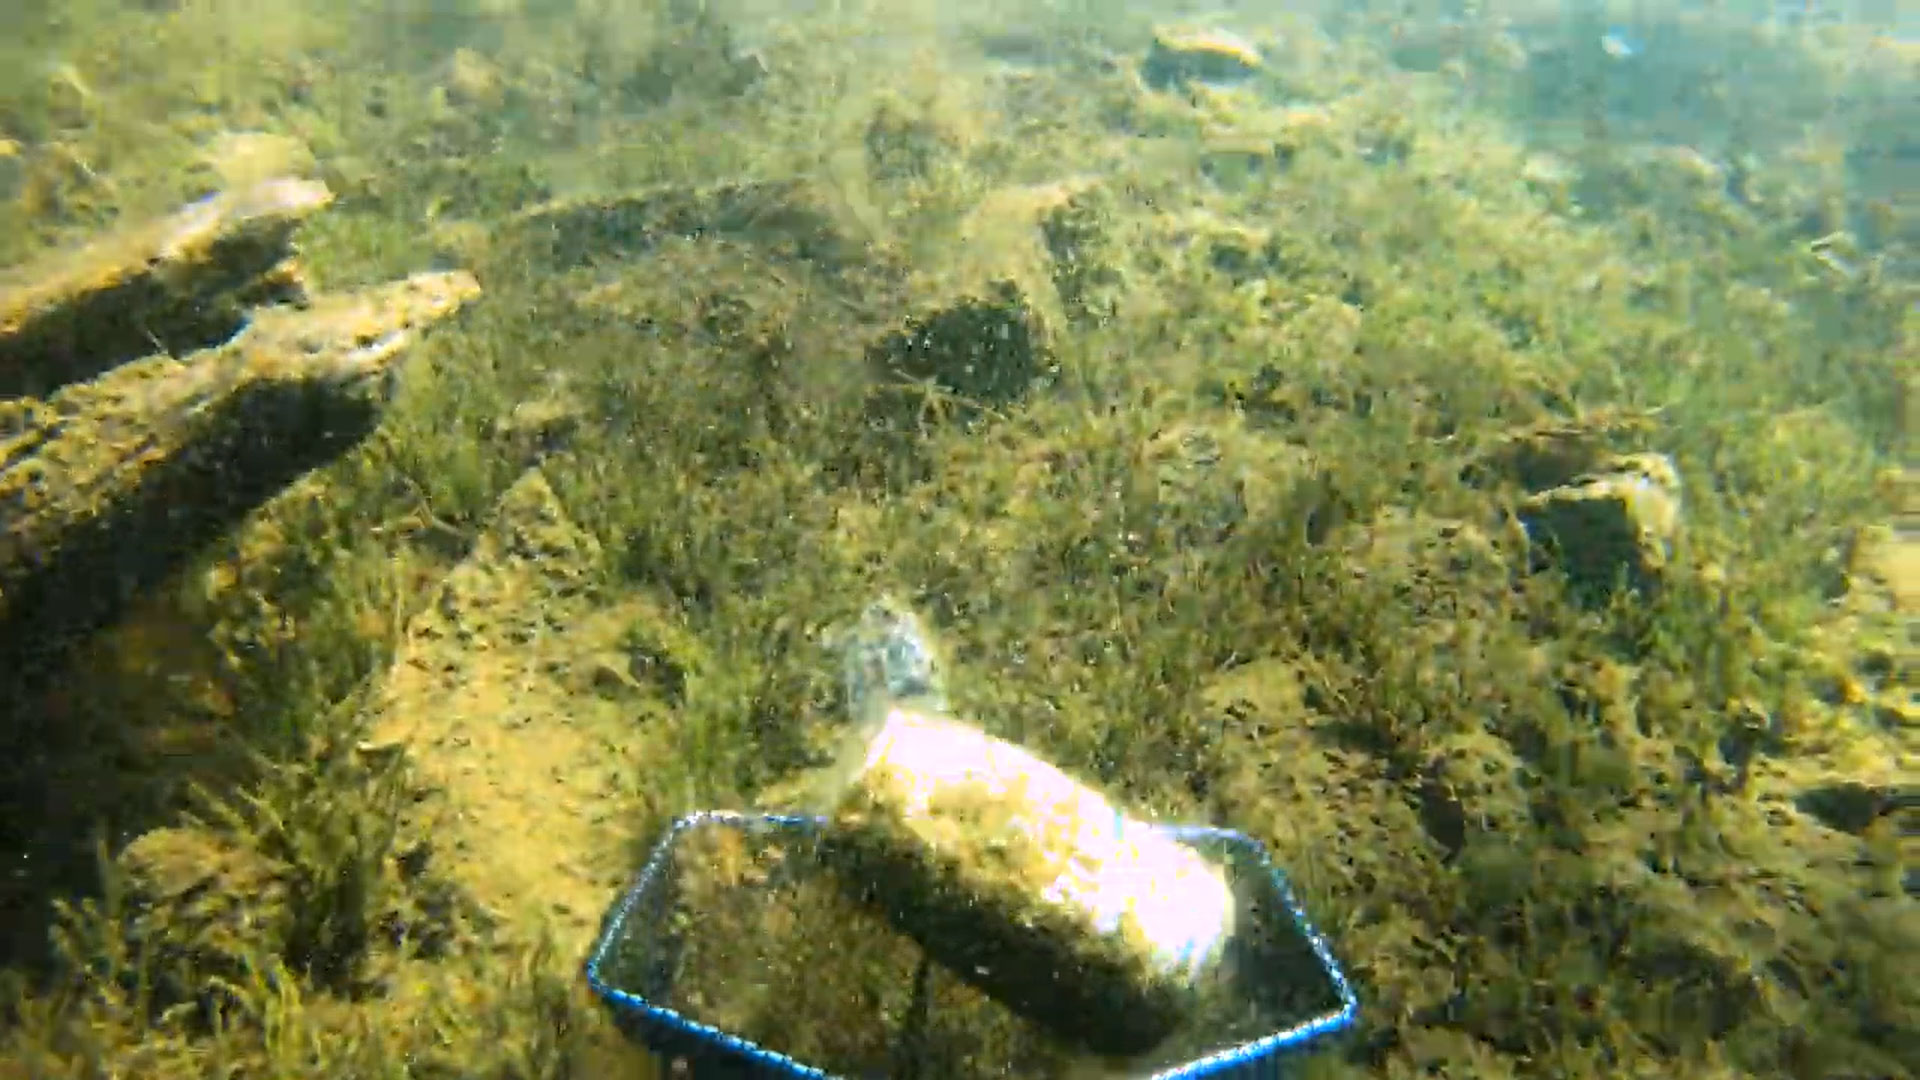 underwater-drone-pickup-aluminum-can-net-attachment.jpg